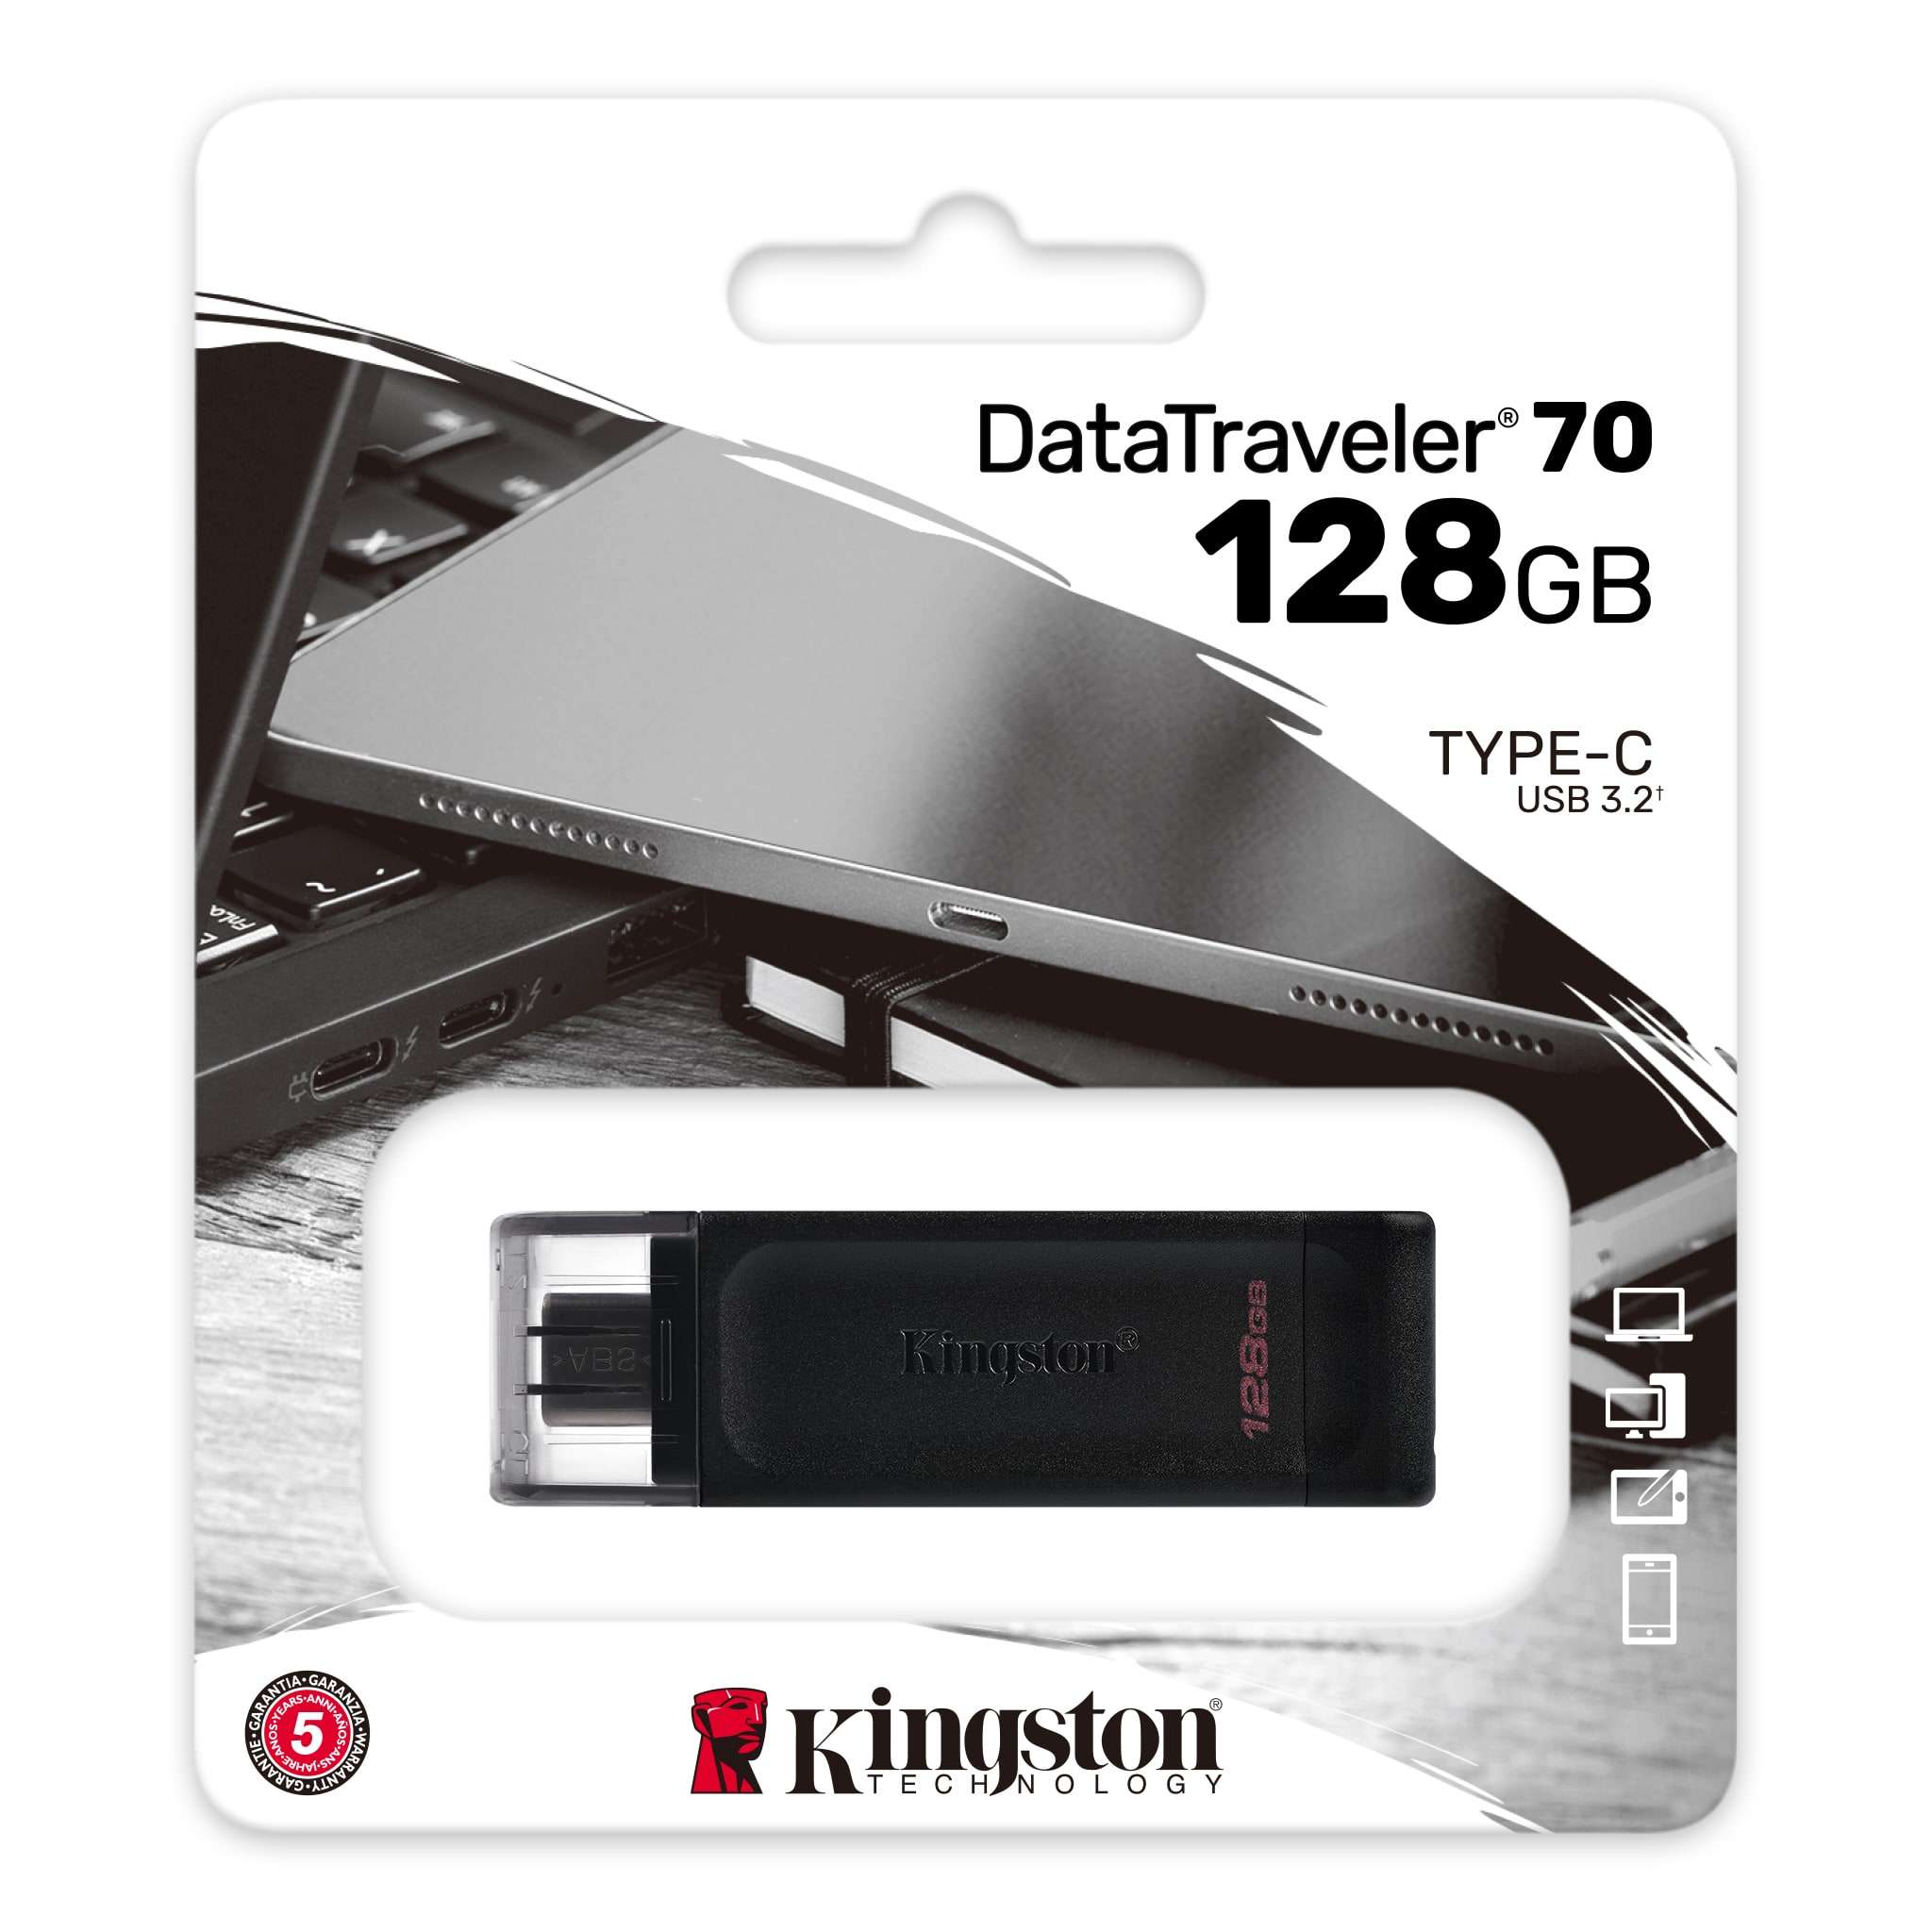 Katastrofe Skynd dig kom videre DataTraveler 70 USB-C Flash Drive – 32GB – 128GB - Kingston Technology